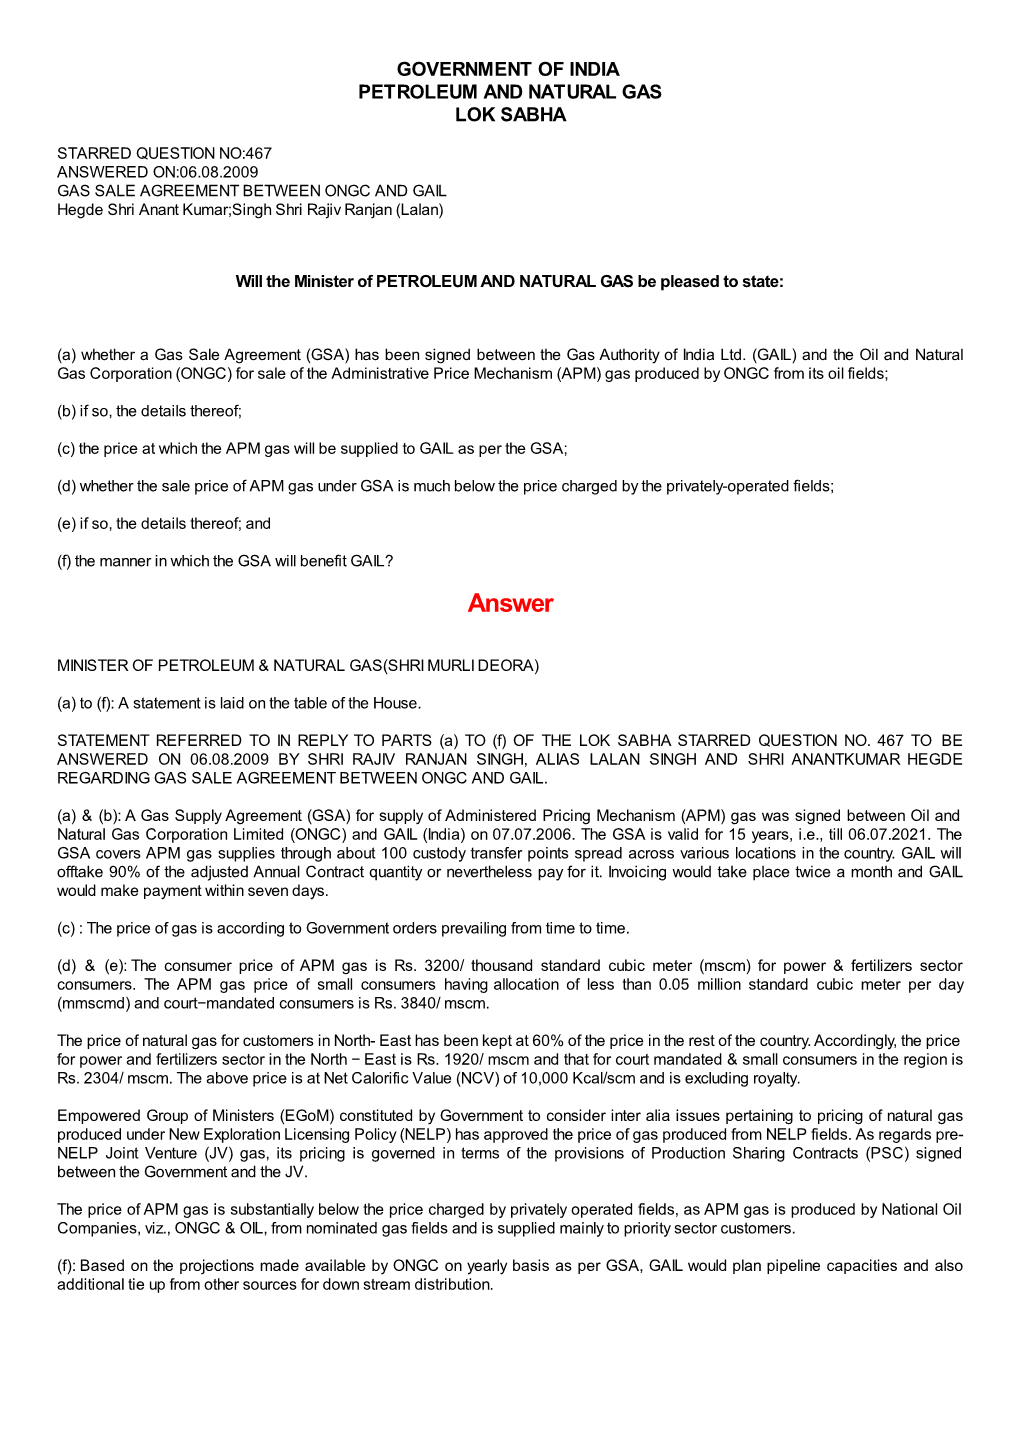 ANSWERED ON:06.08.2009 GAS SALE AGREEMENT BETWEEN ONGC and GAIL Hegde Shri Anant Kumar;Singh Shri Rajiv Ranjan (Lalan)